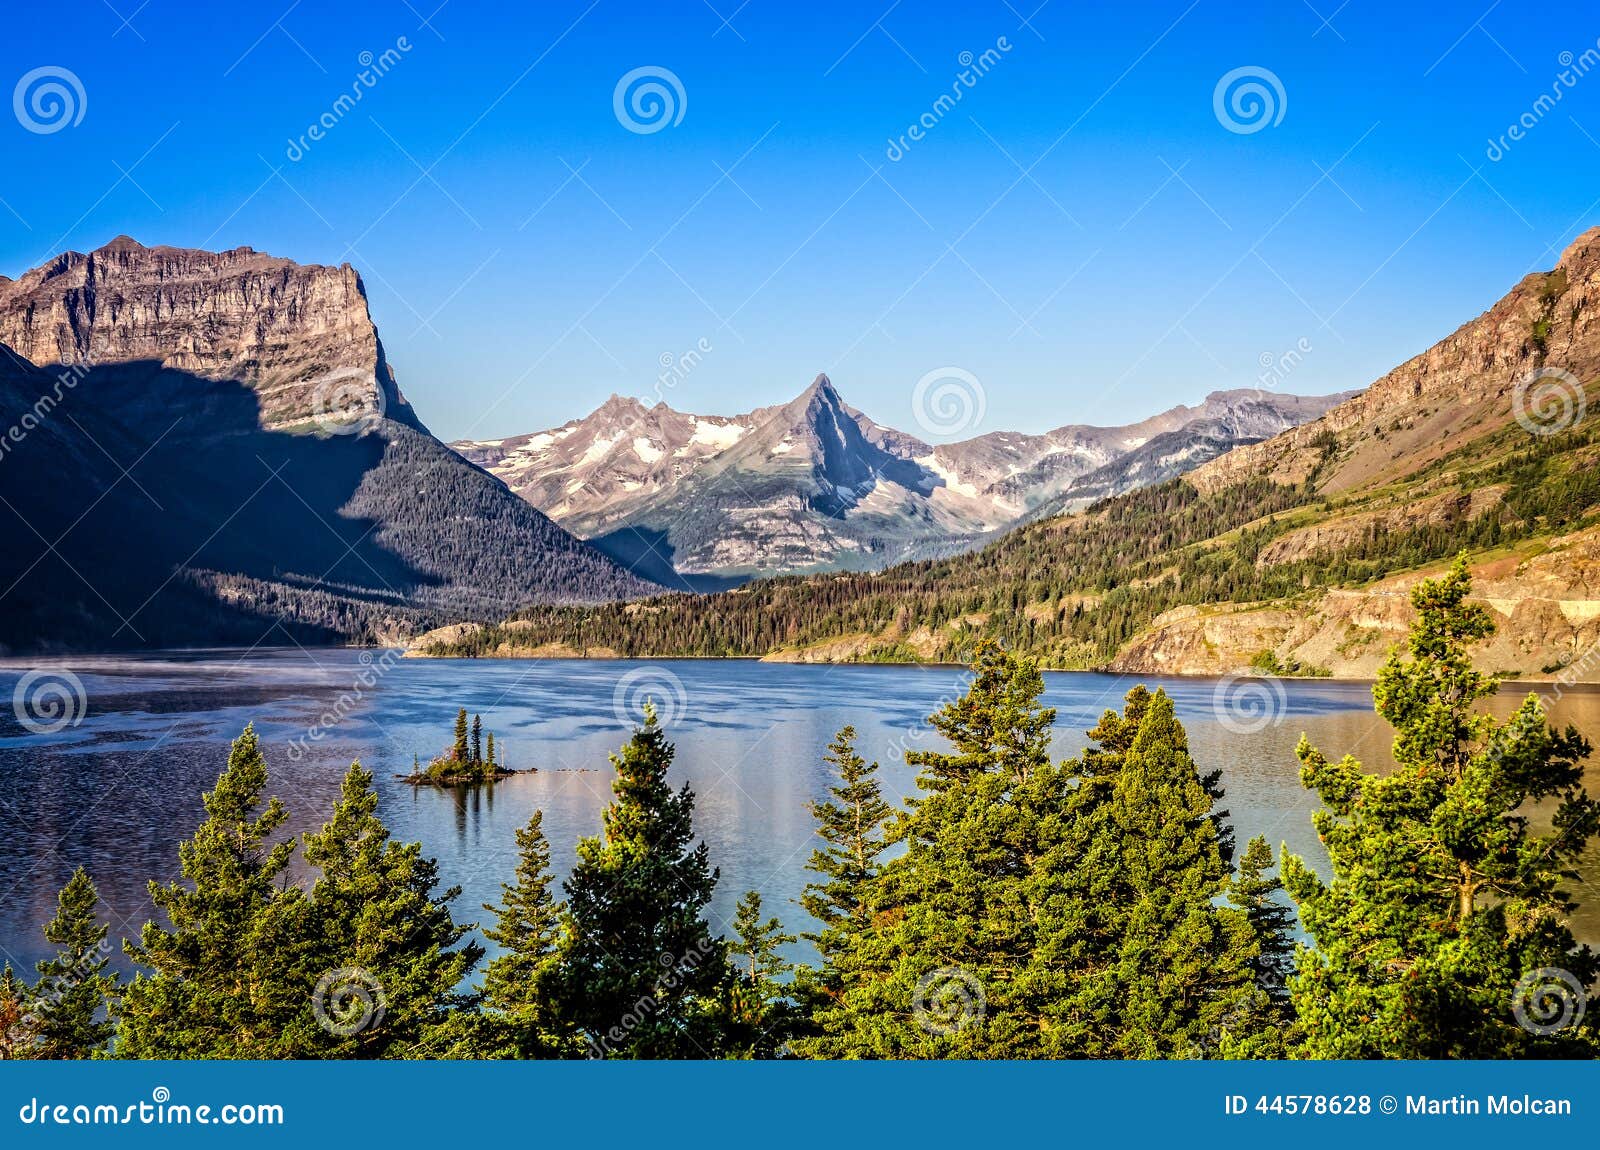 landscape view of mountain range in glacier np, montana, usa